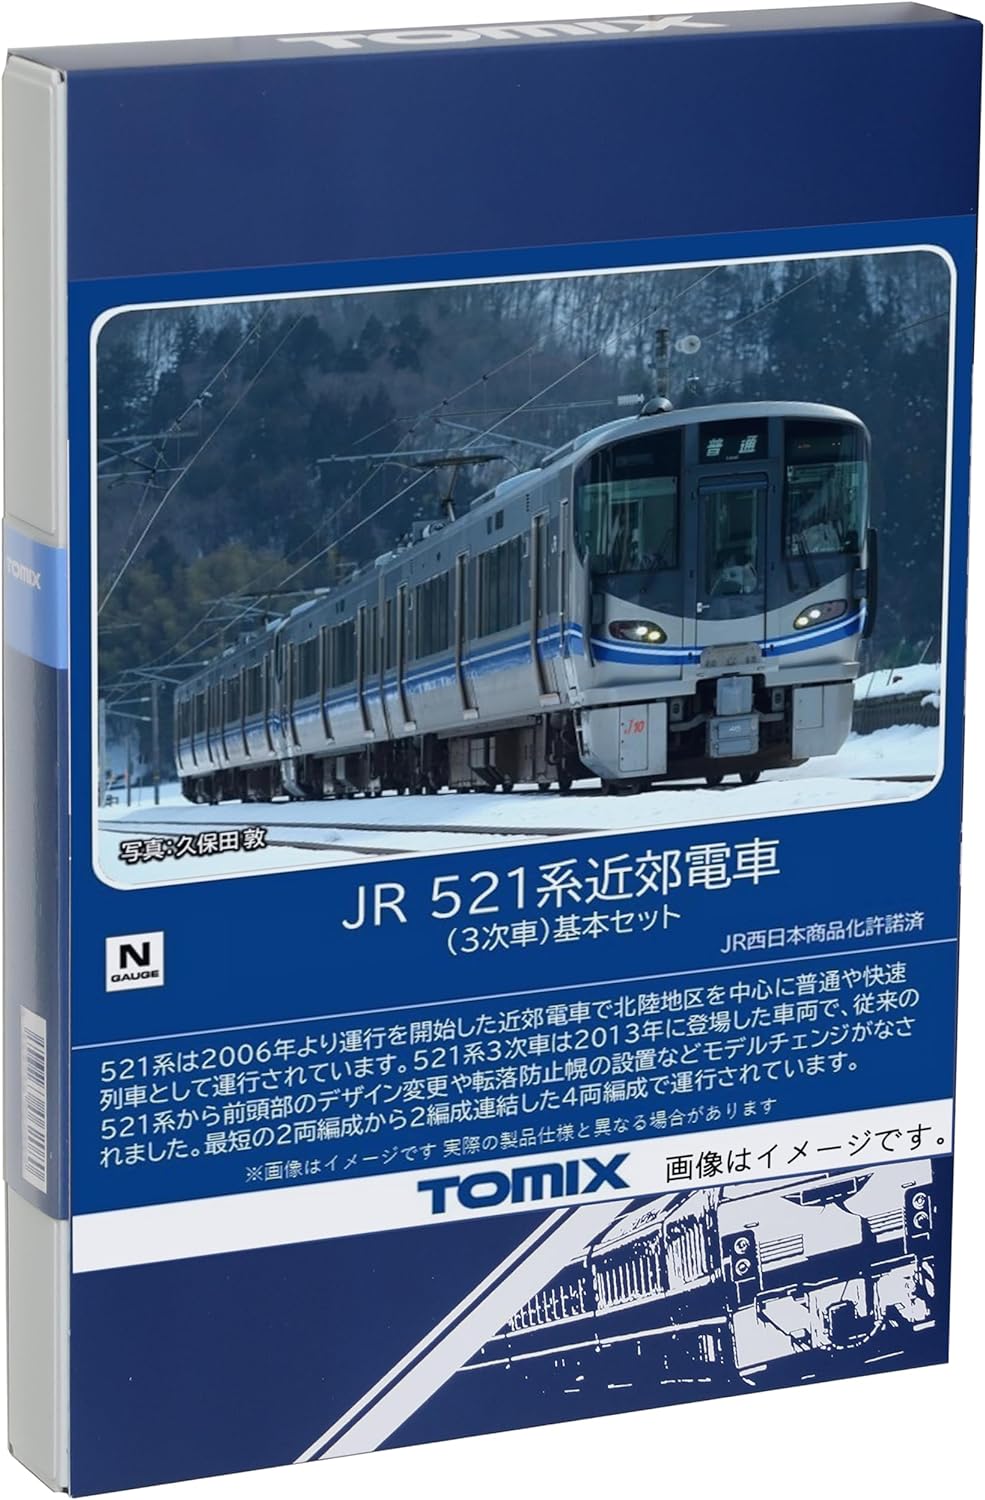 TOMIX 98131 N Gauge JR 521 Series 3rd Car Basic Set Railway Model Train